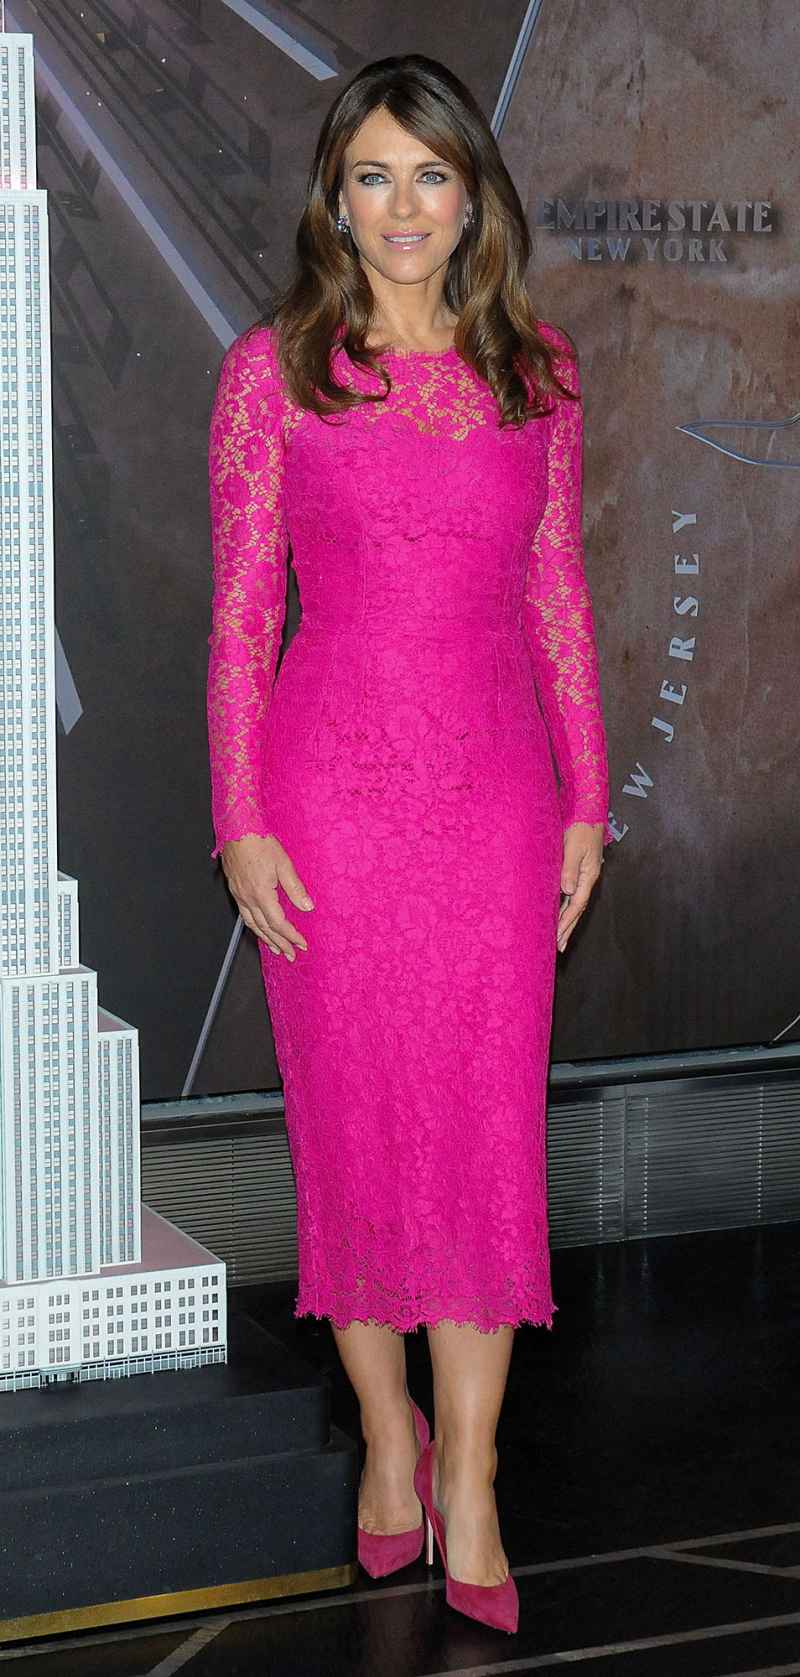 Elizabeth Hurley Pink Dress Empire State Building